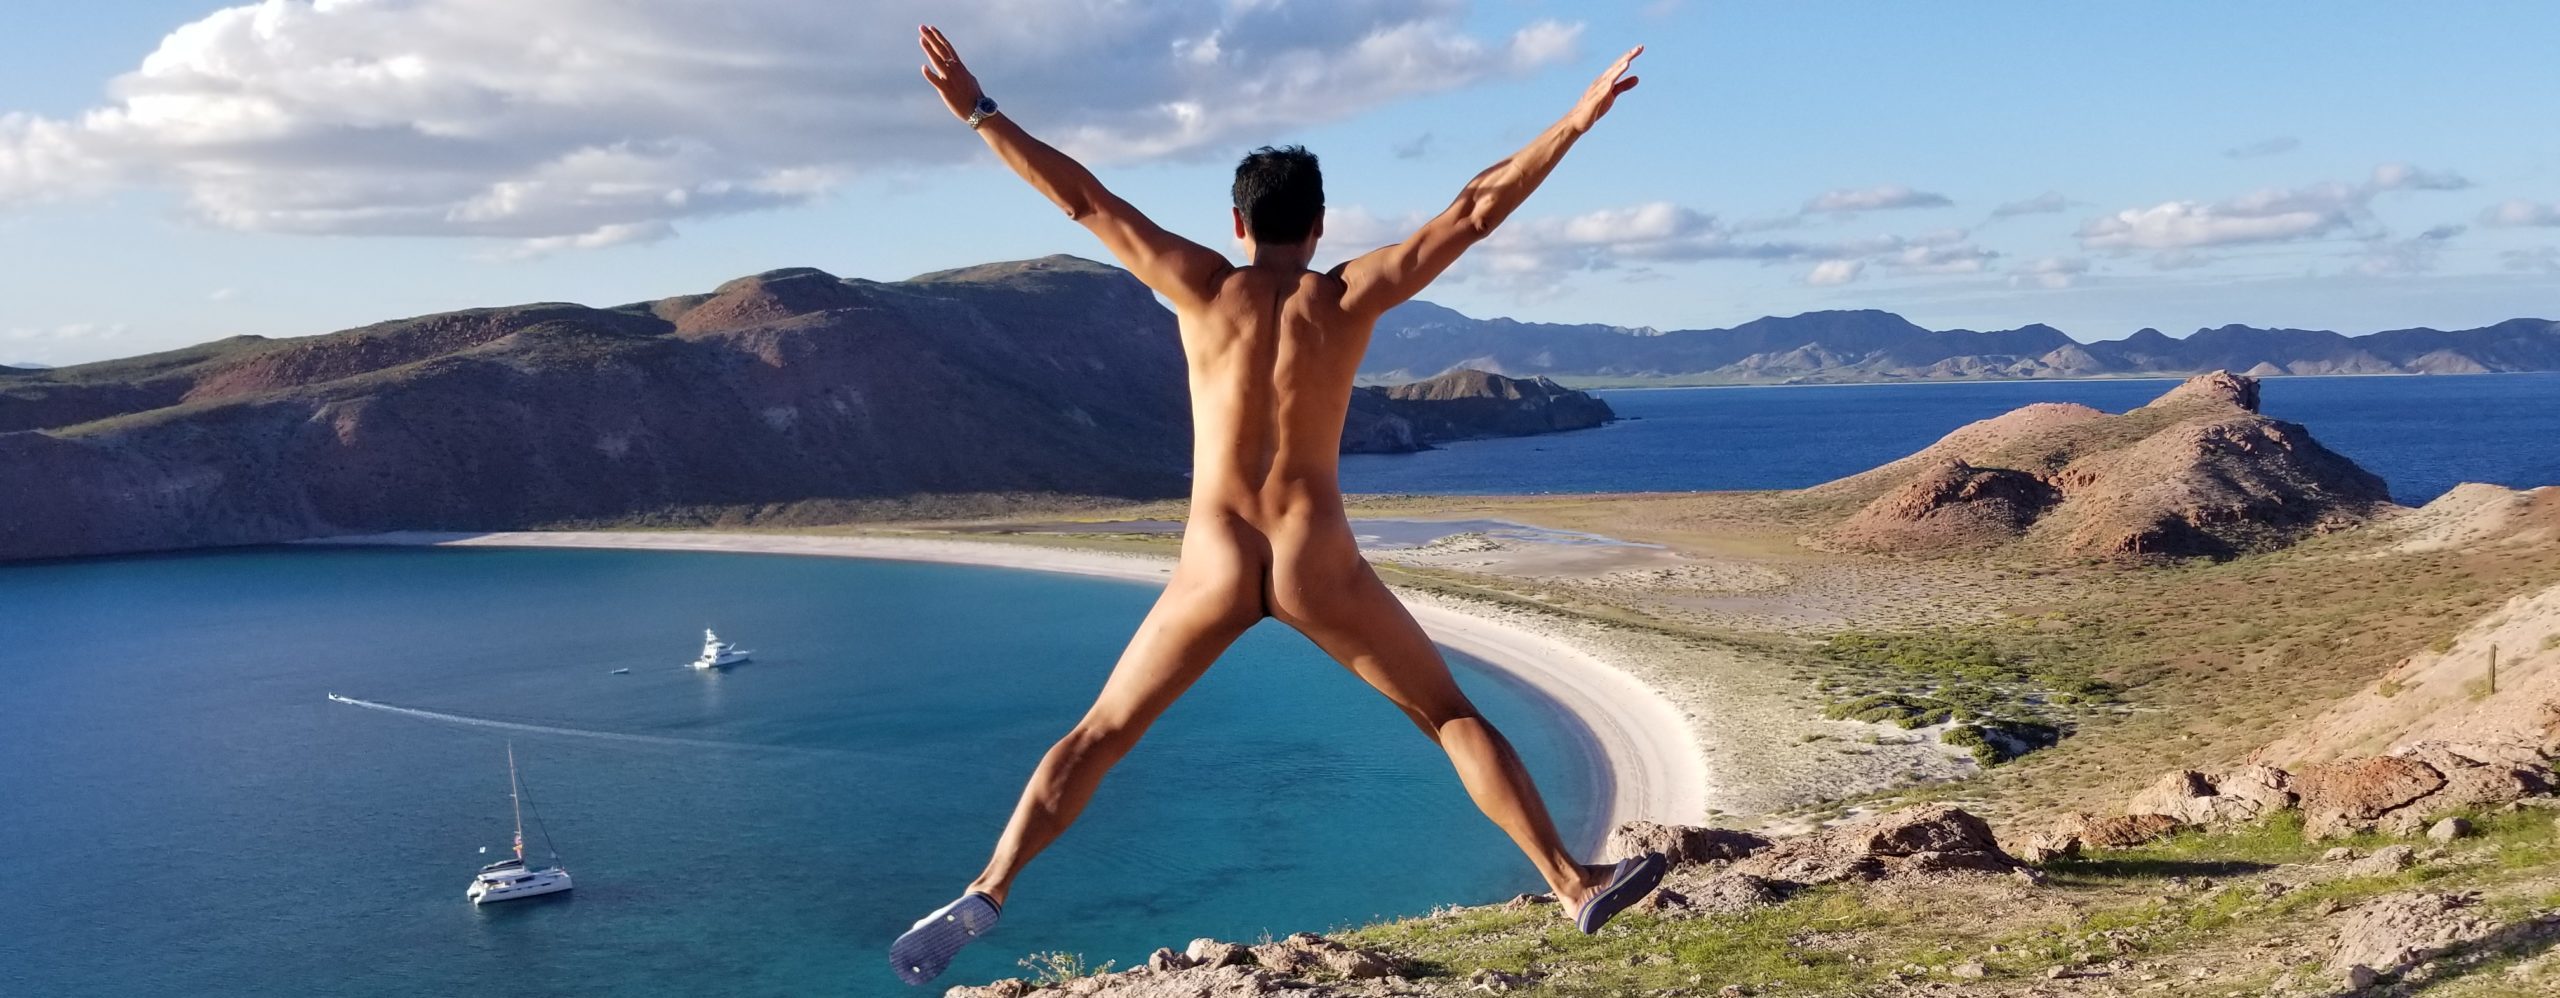 Saltyboys Mexico Baja California nudist jump